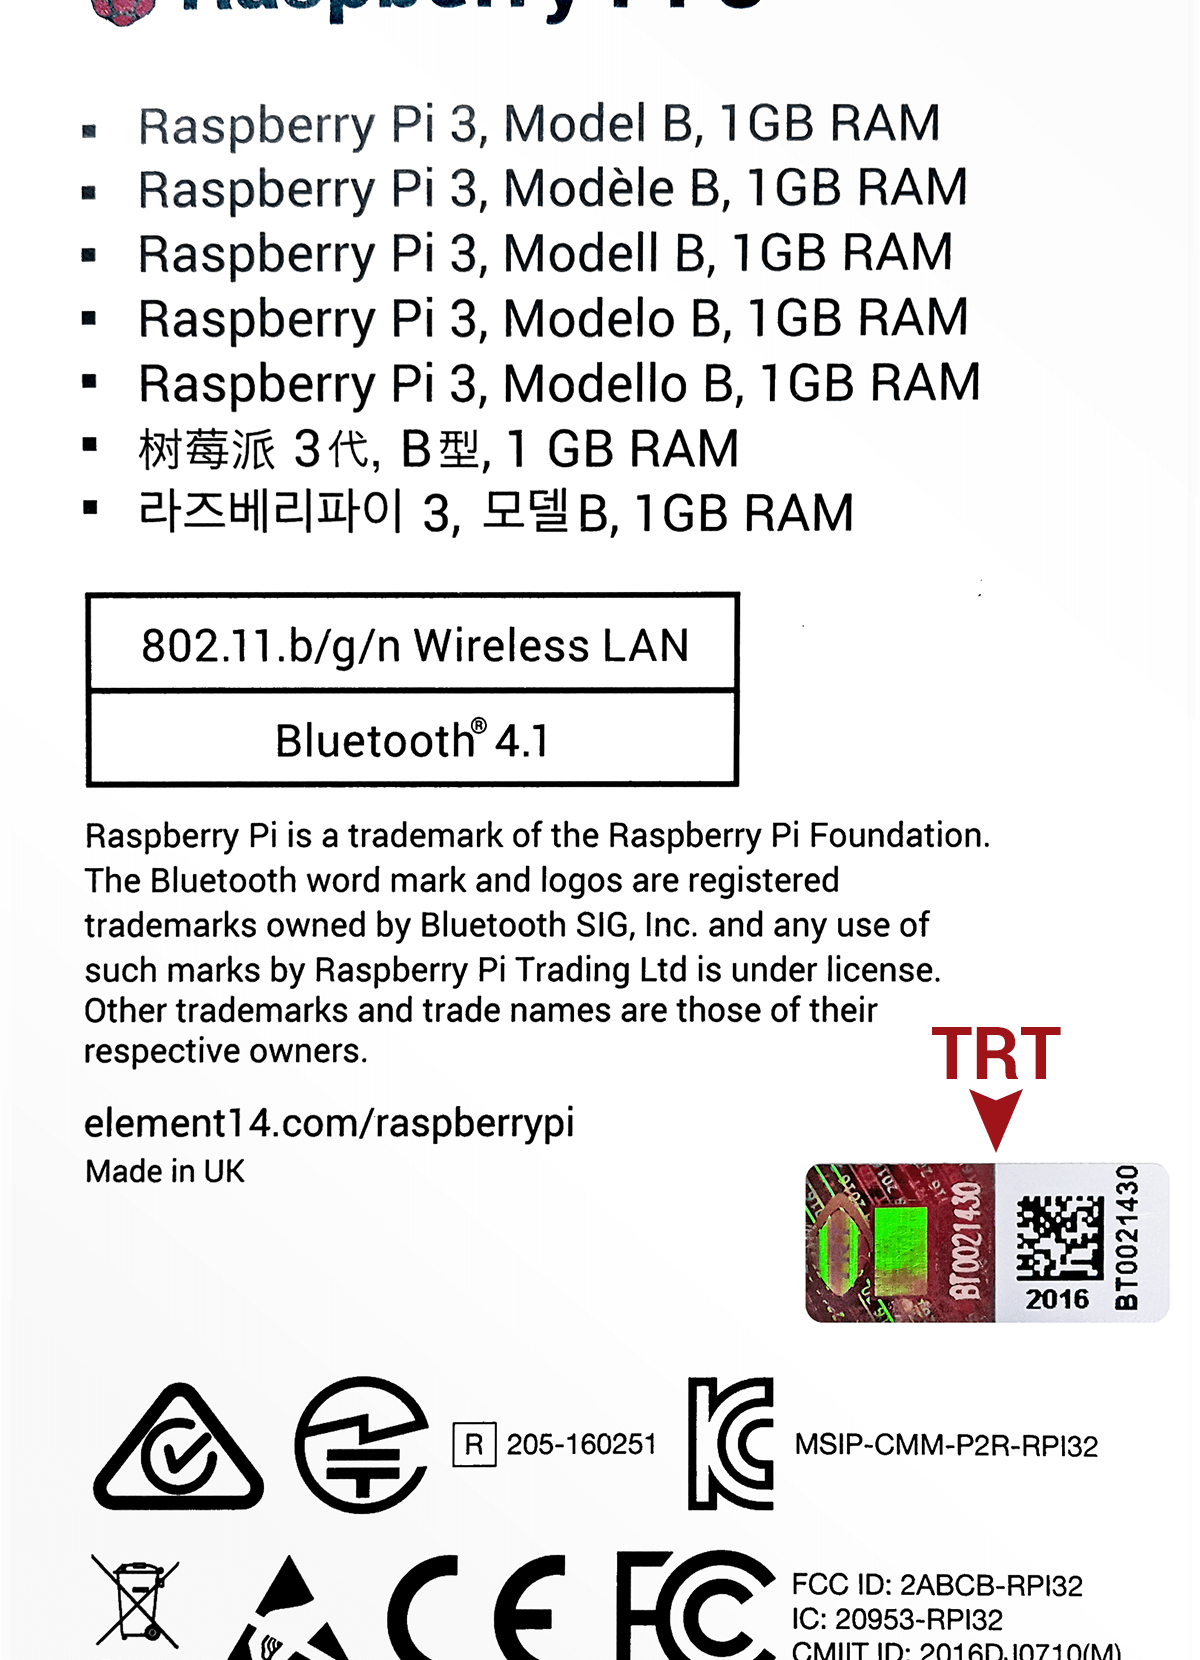 Raspberry Pi Models